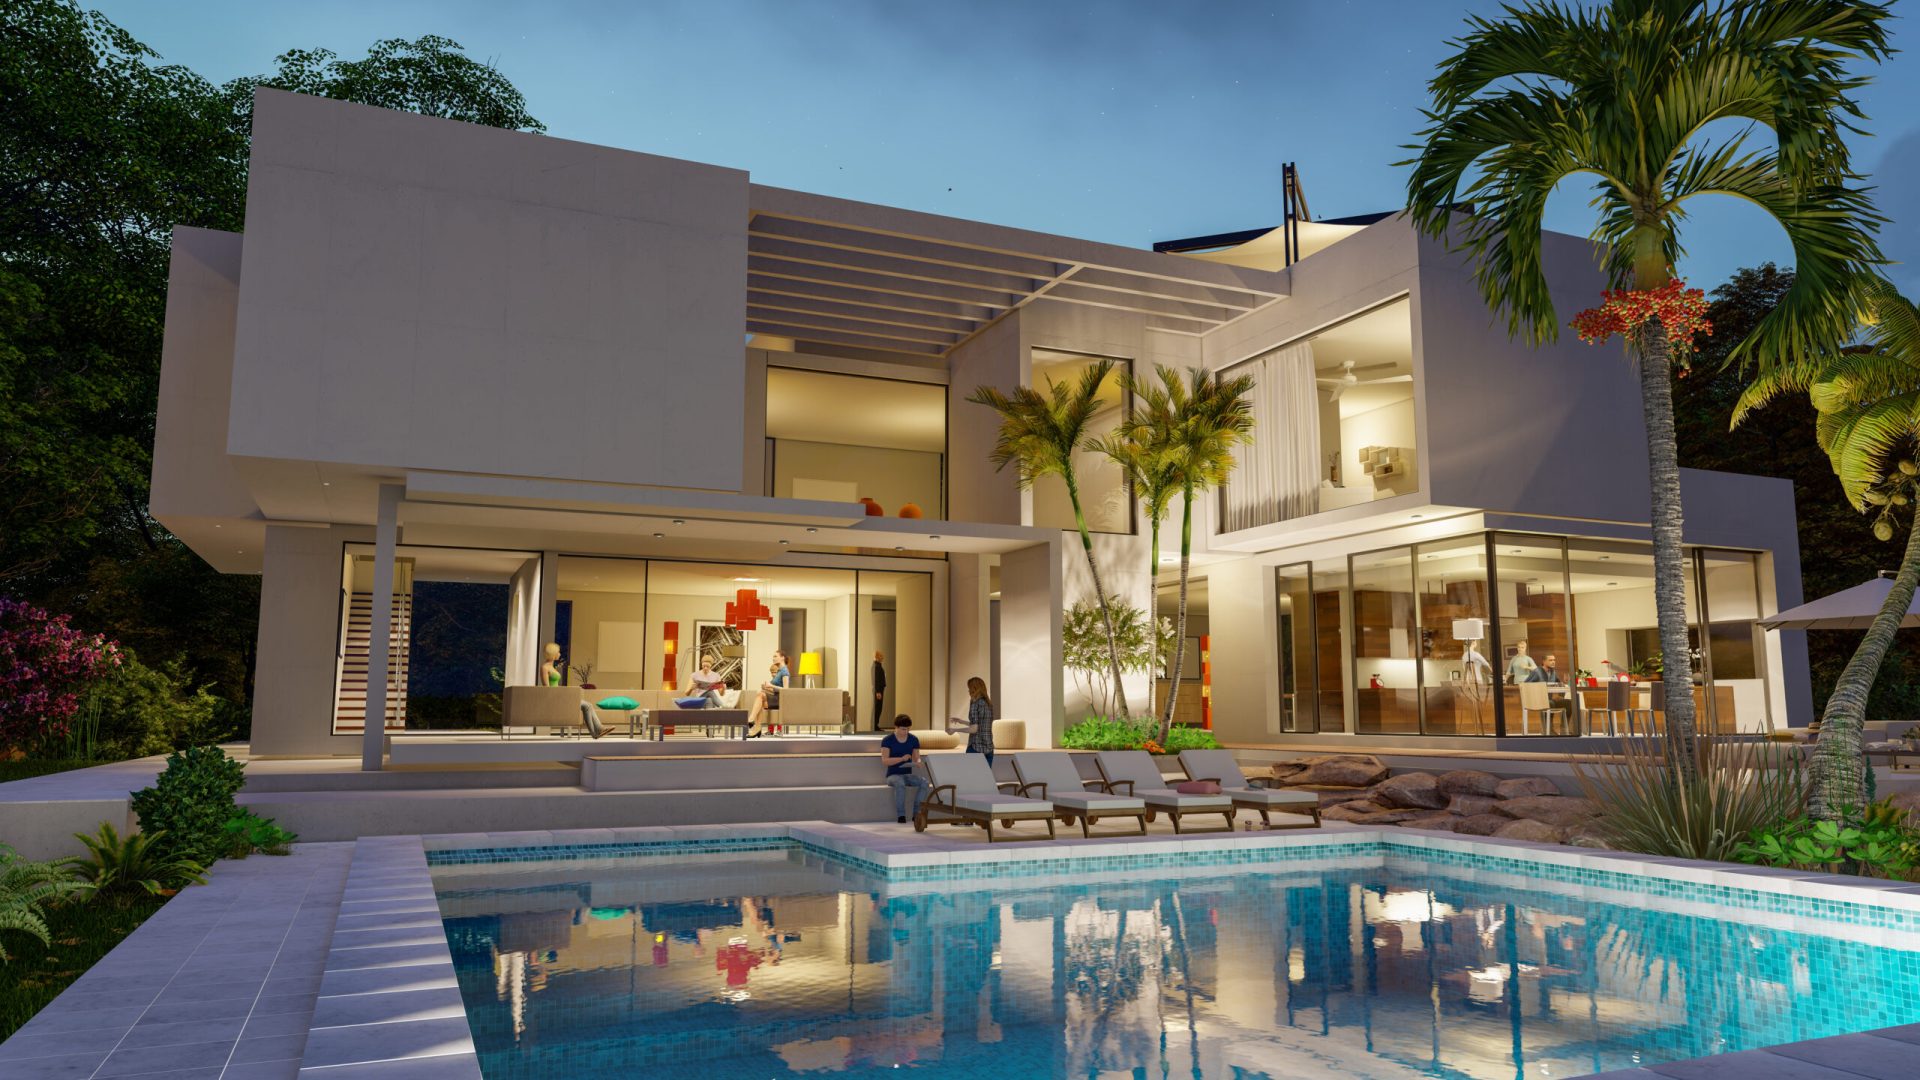 luxury modern villa with pool at dusk